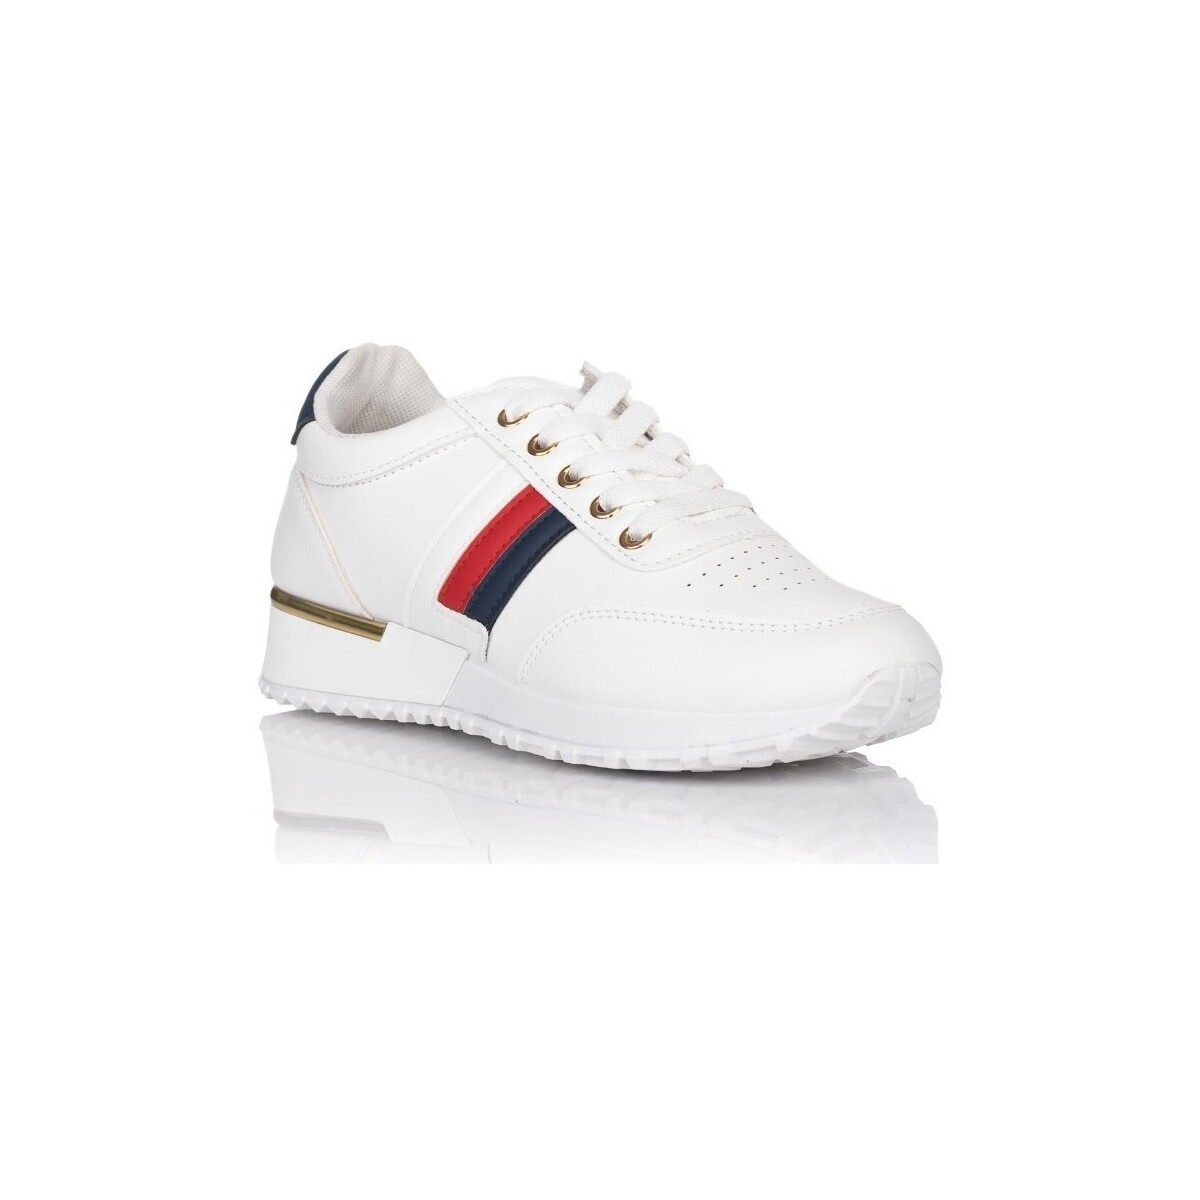 Sapatos Mulher Sapatilhas Sport YY52 Branco